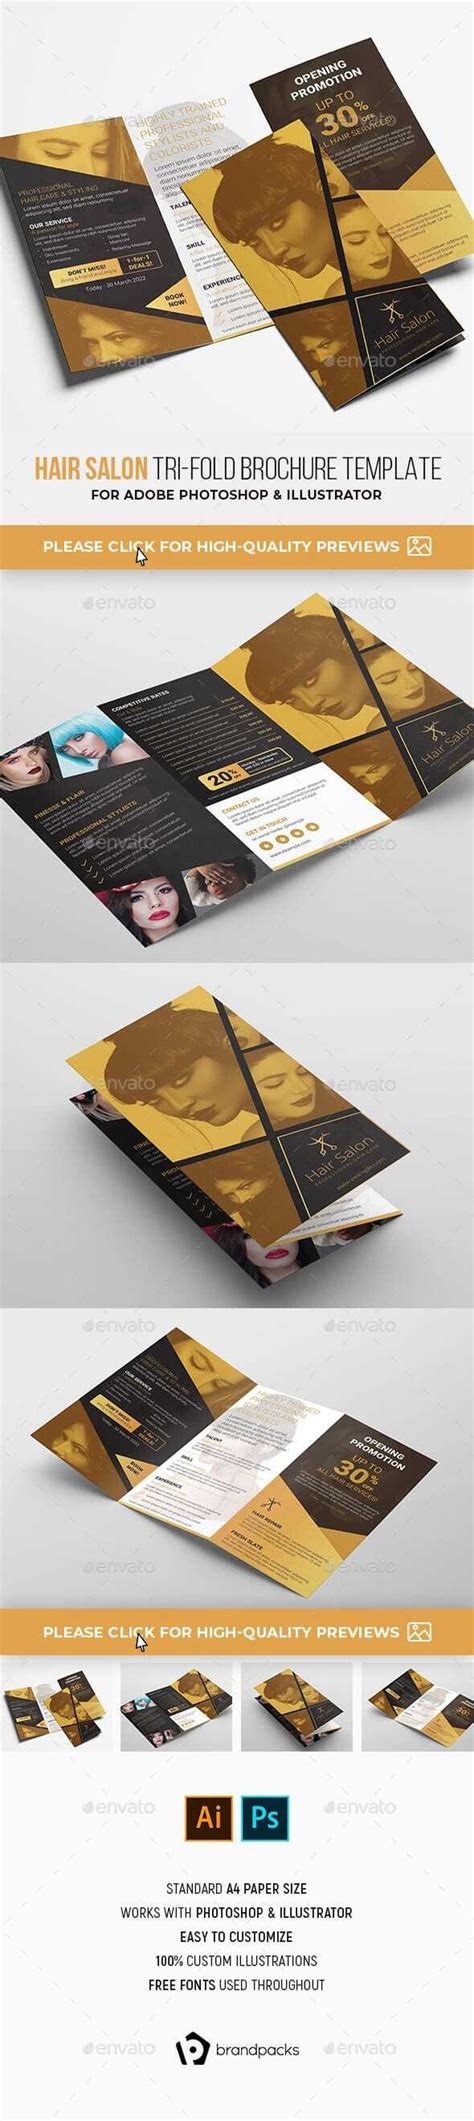 Hair Salon Tri Fold Brochure By Brandpacks Graphicriver